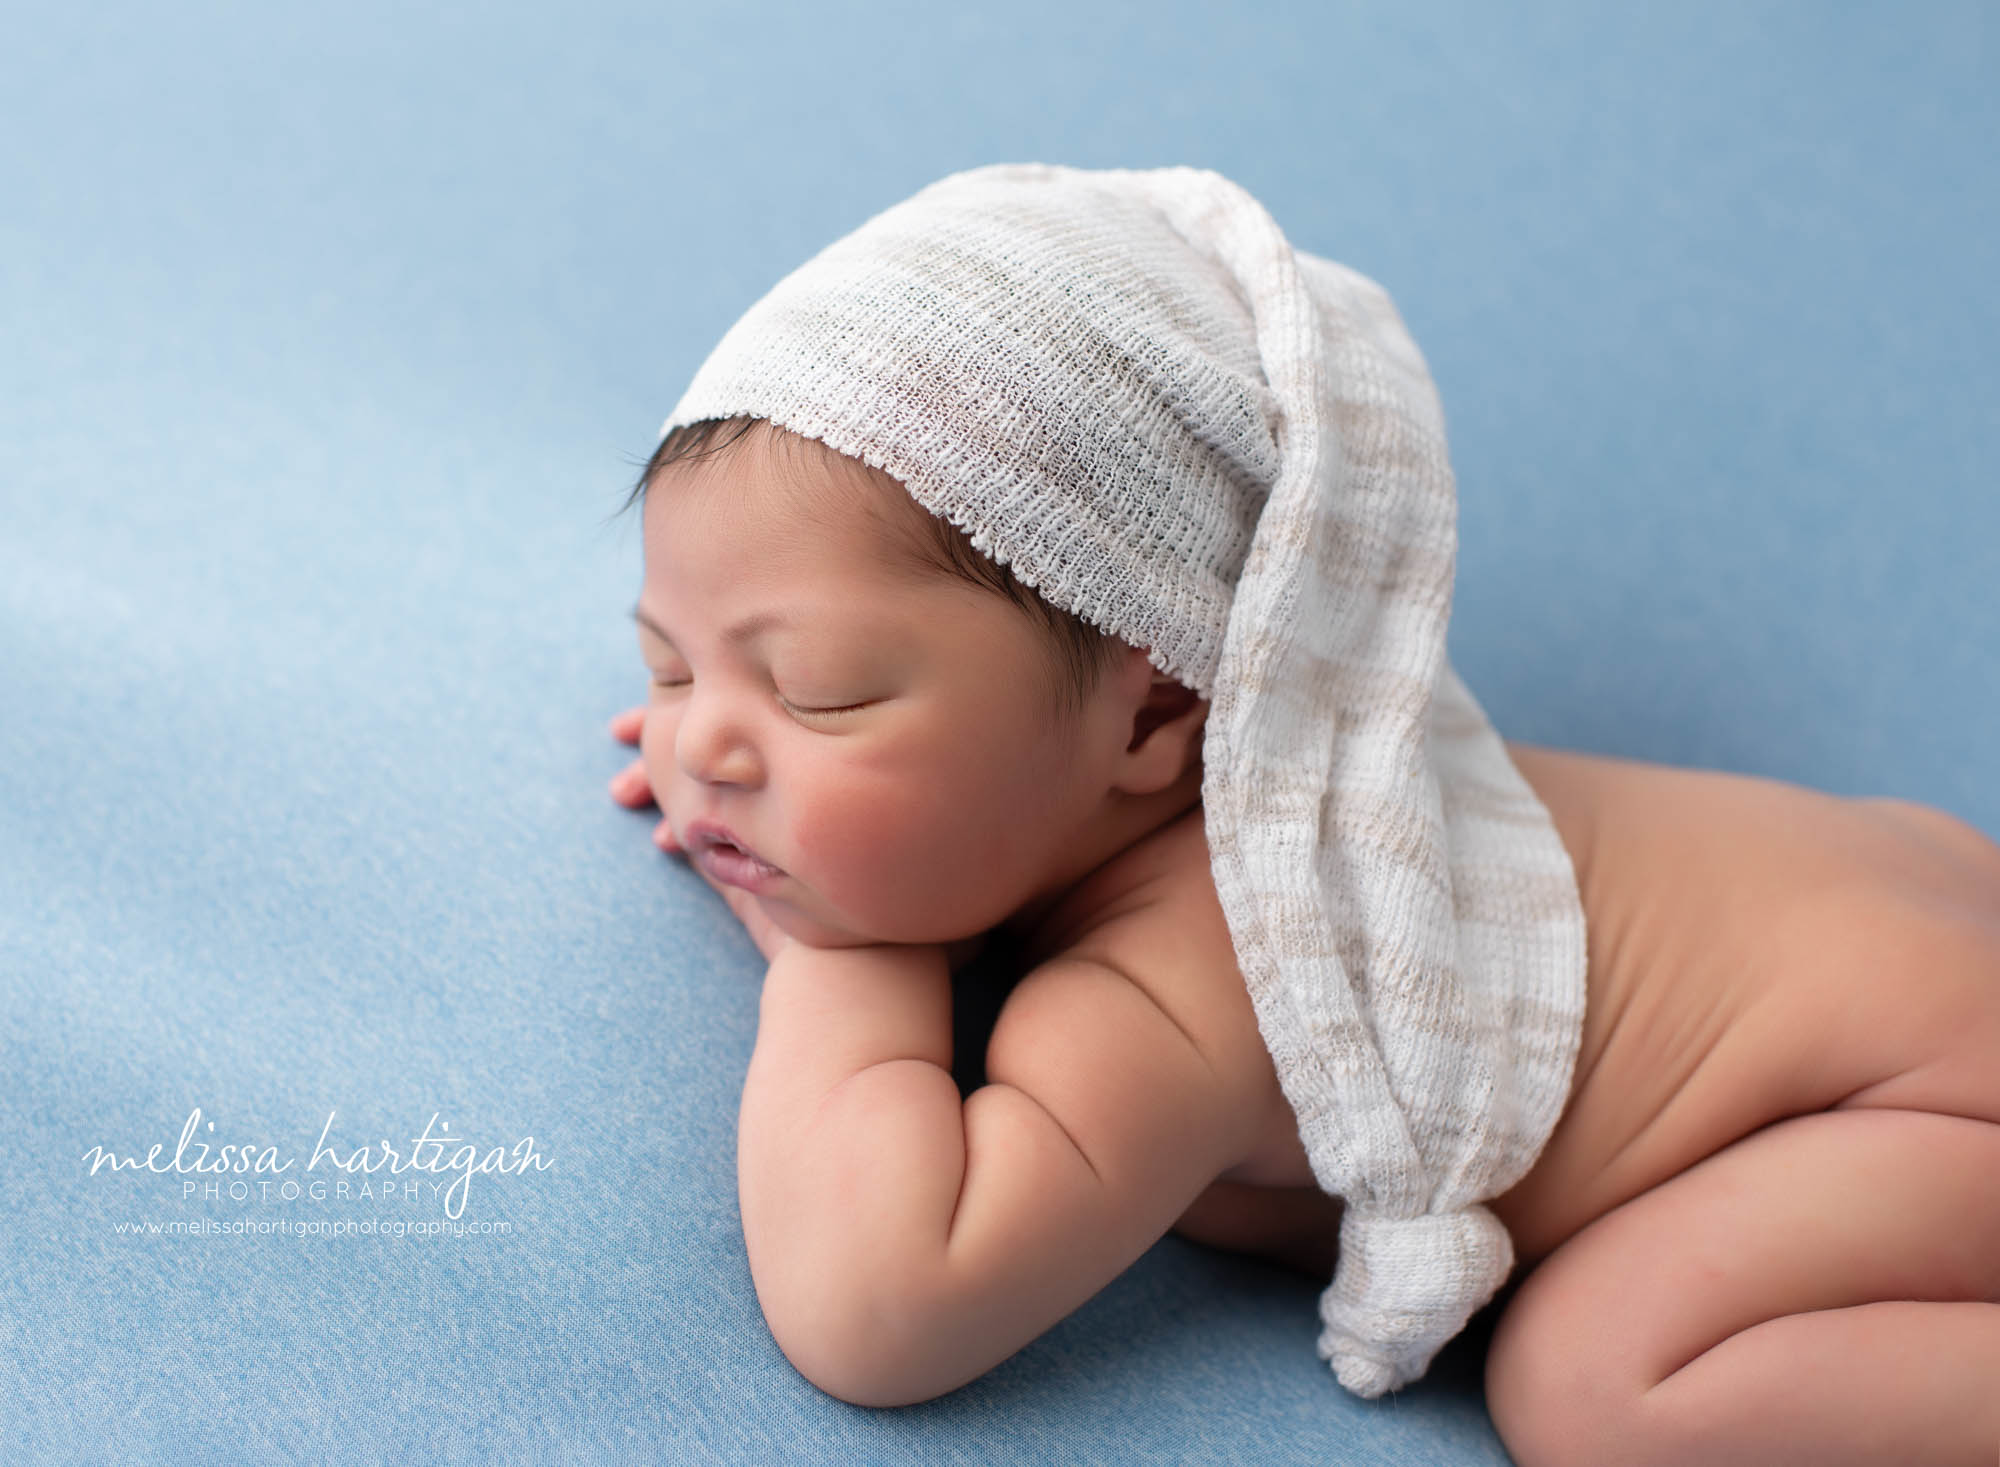 Baby boy posed on blue blankte wearing cream colored sleepy cap